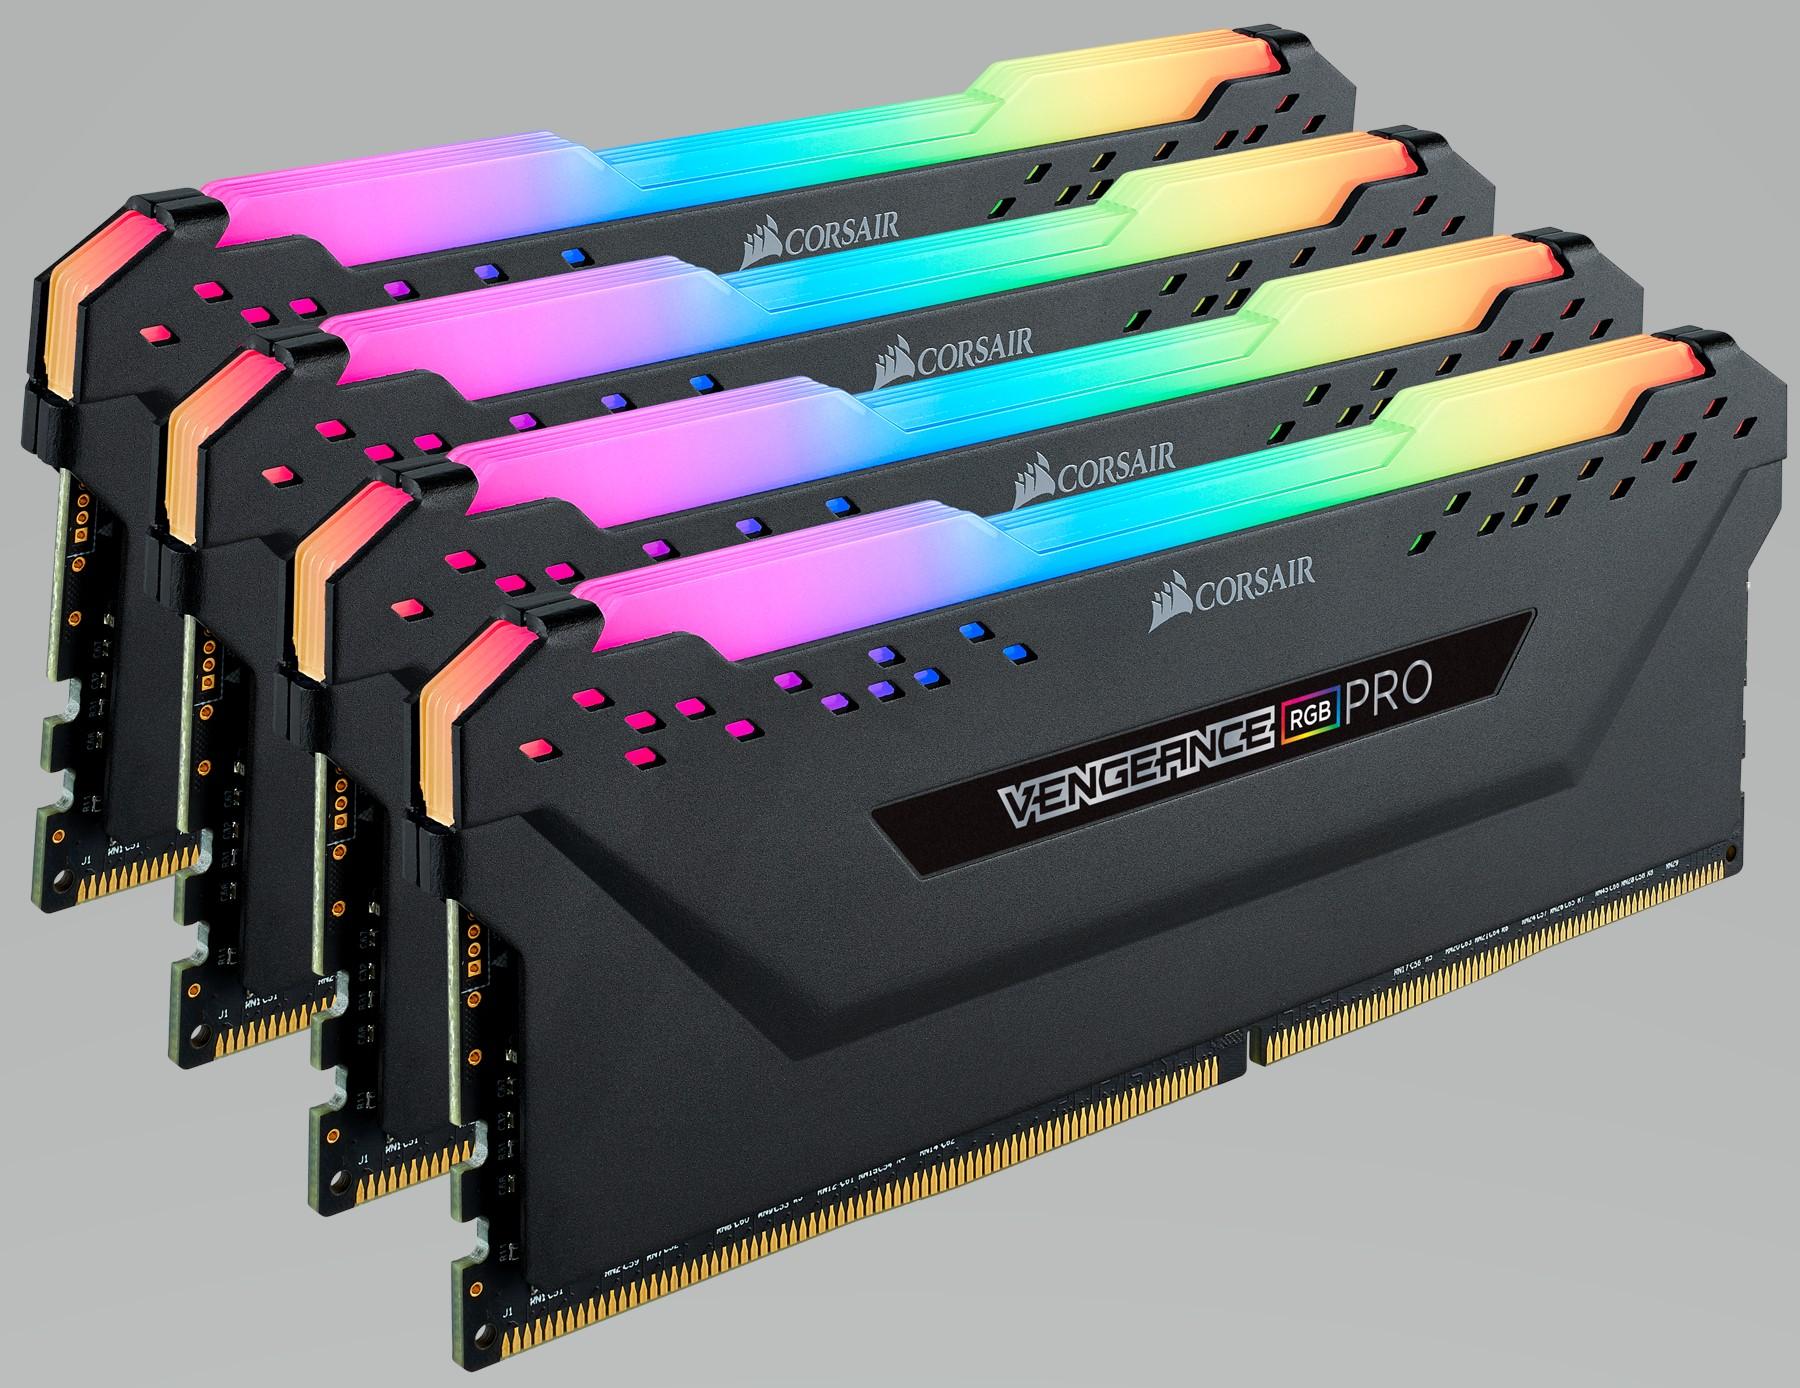 MEMORIA DDR4 CORSAIR VENG. RGB PRO 32GB 2600 4x8 CMW32GX4M4A2666C16 - CORSAIR